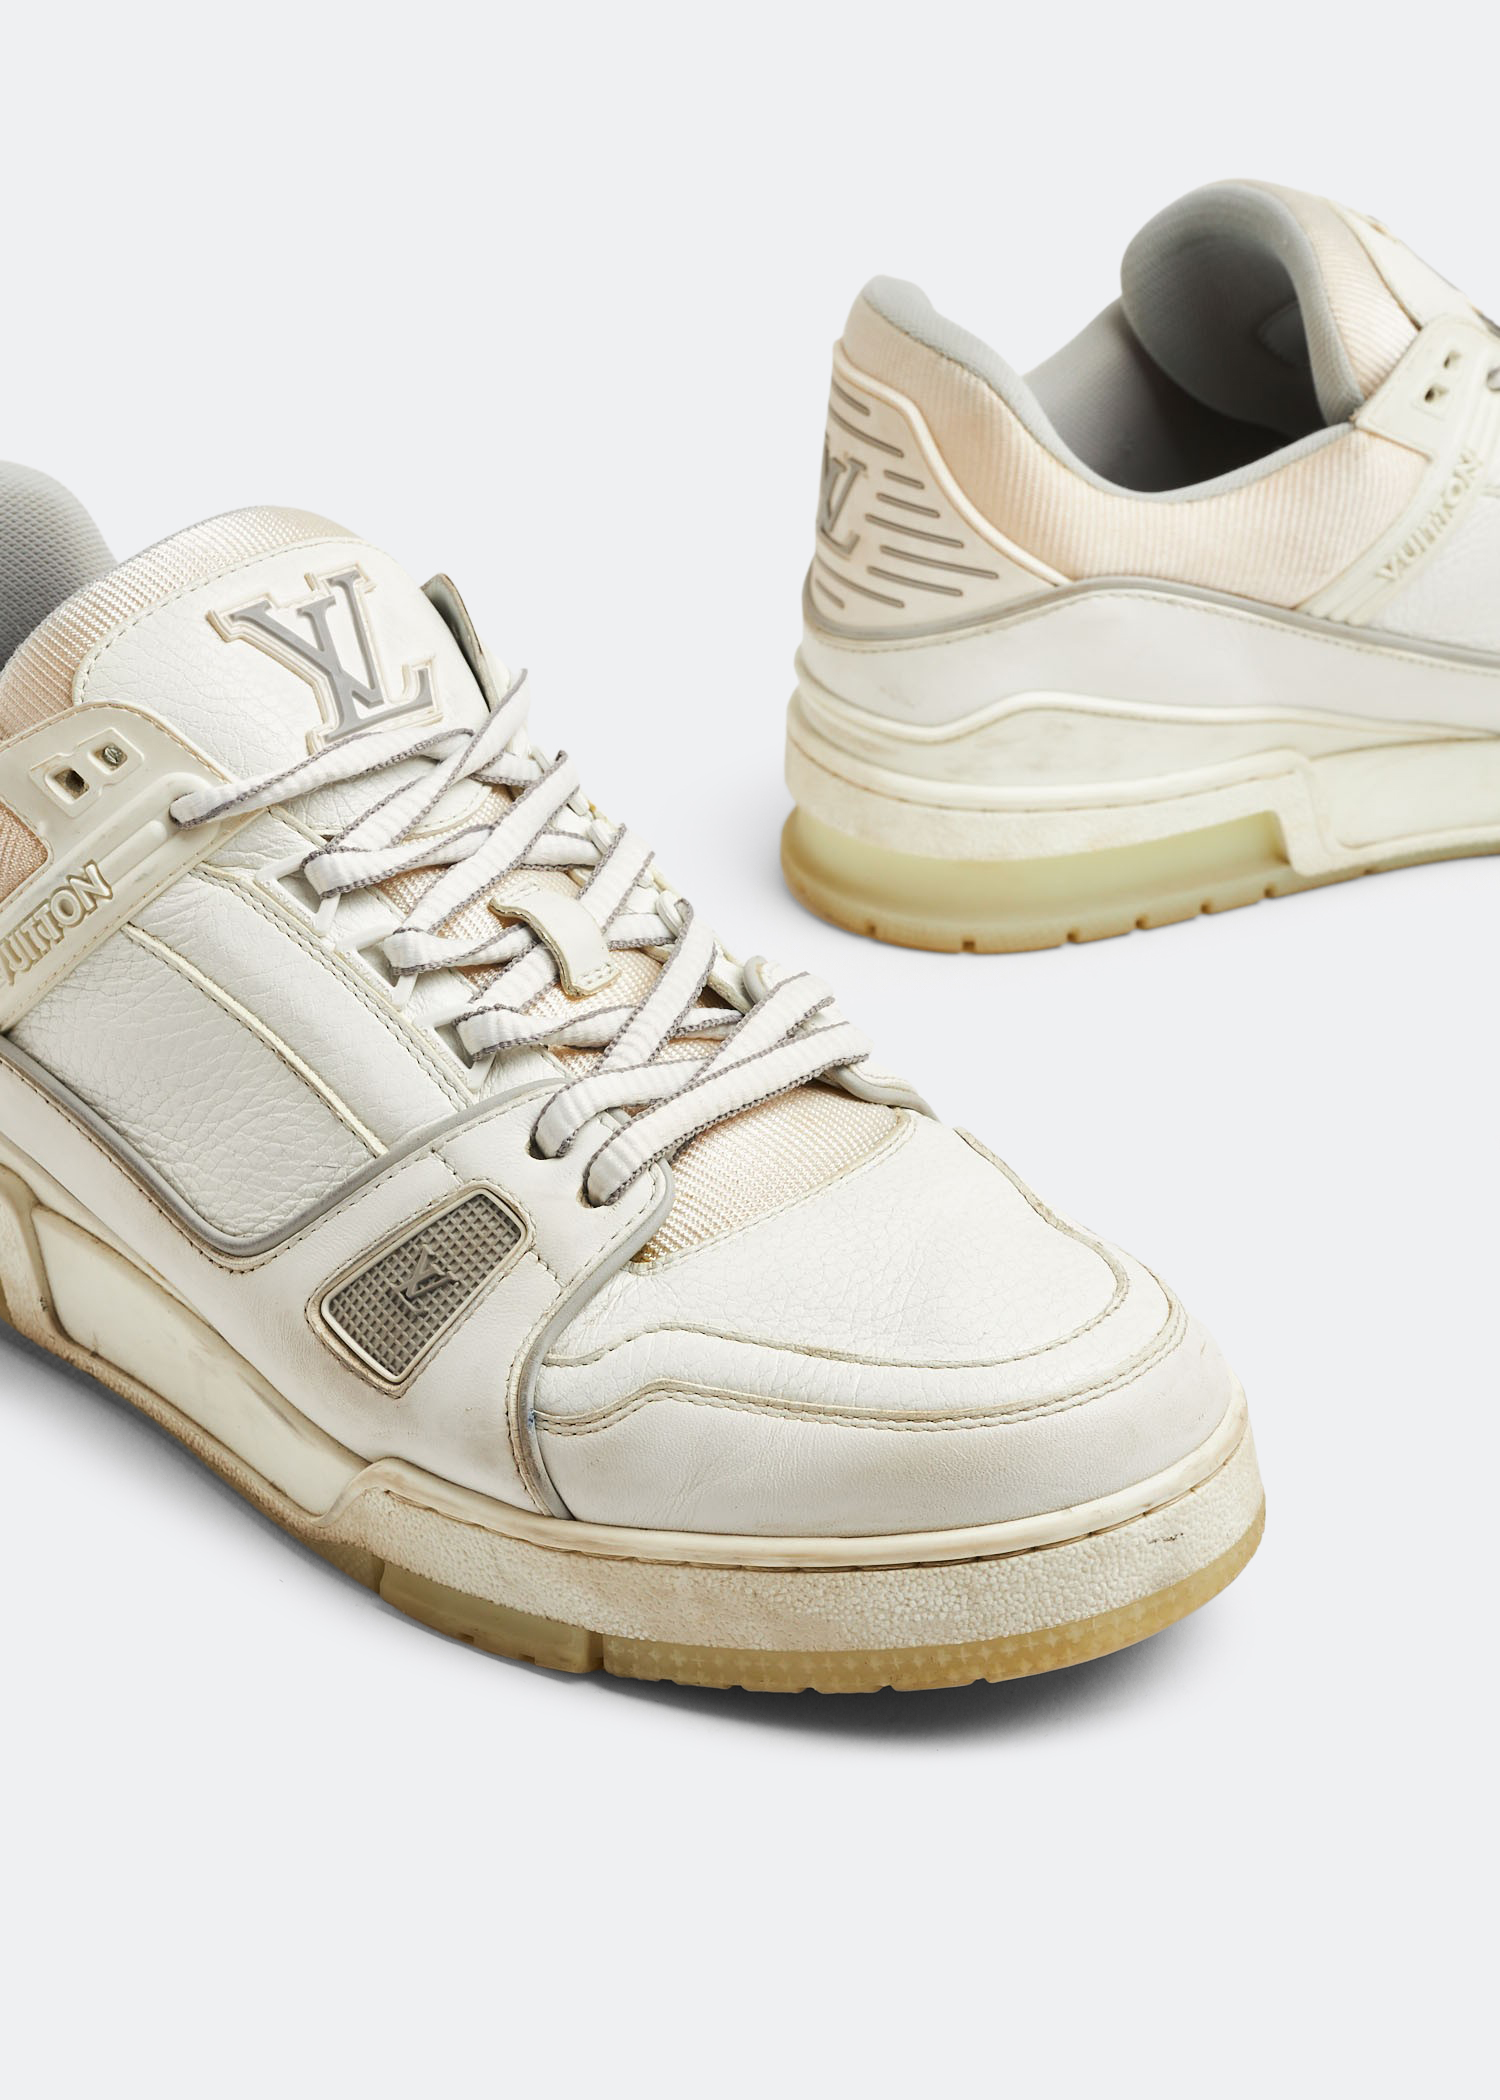 Louis Vuitton Pre-Loved LV 54 sneakers for Men - Black in KSA